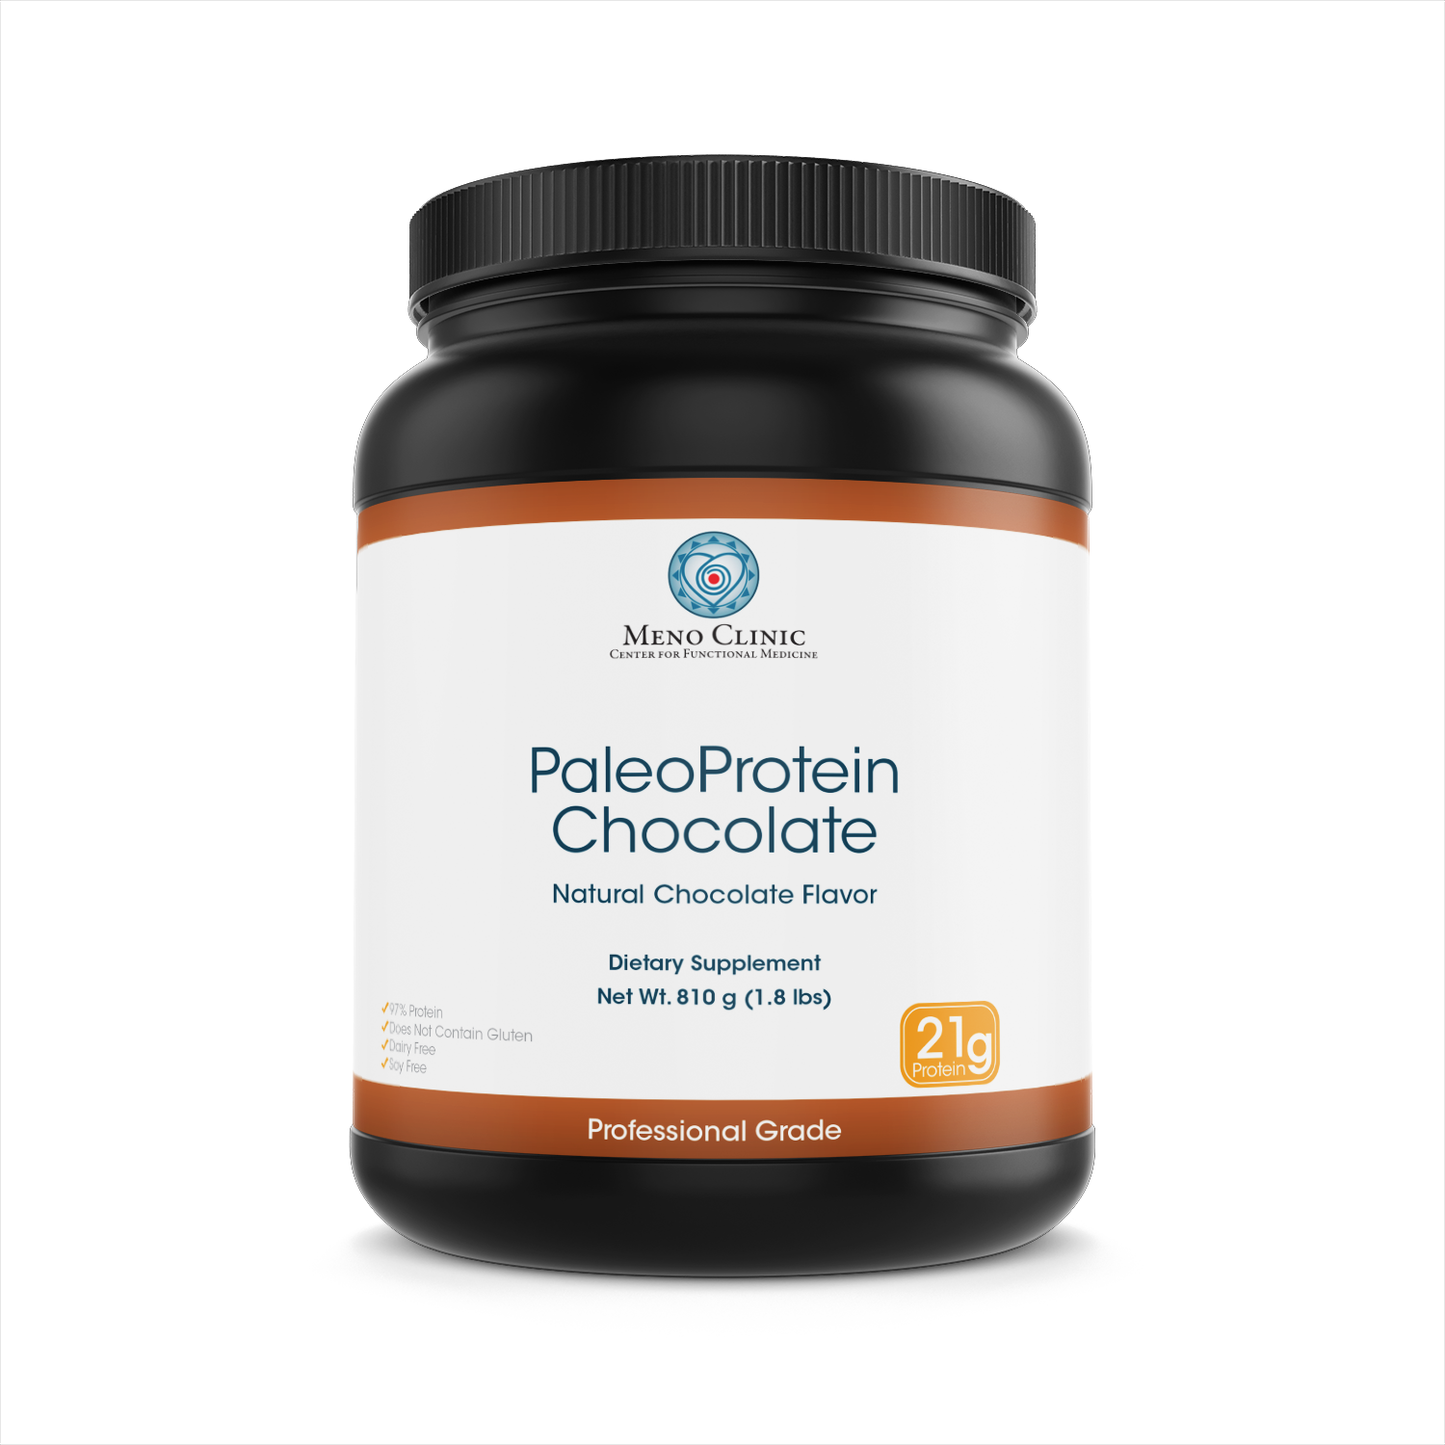 PaleoProtein Chocolate